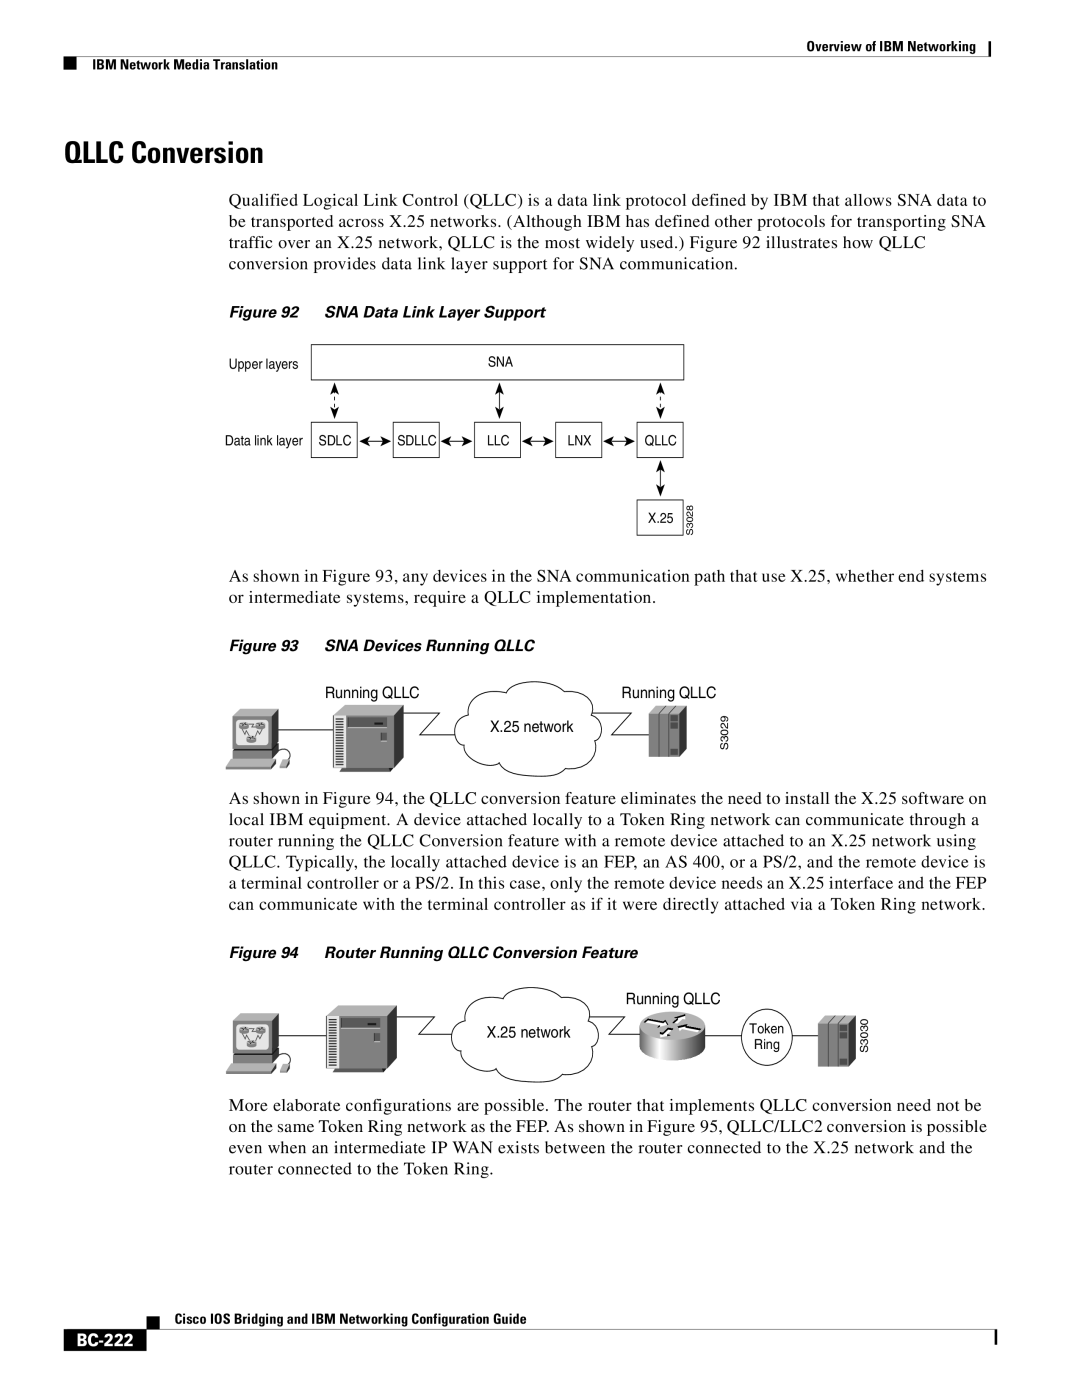 IBM BC-203 manual QLLC Conversion, BC-222 